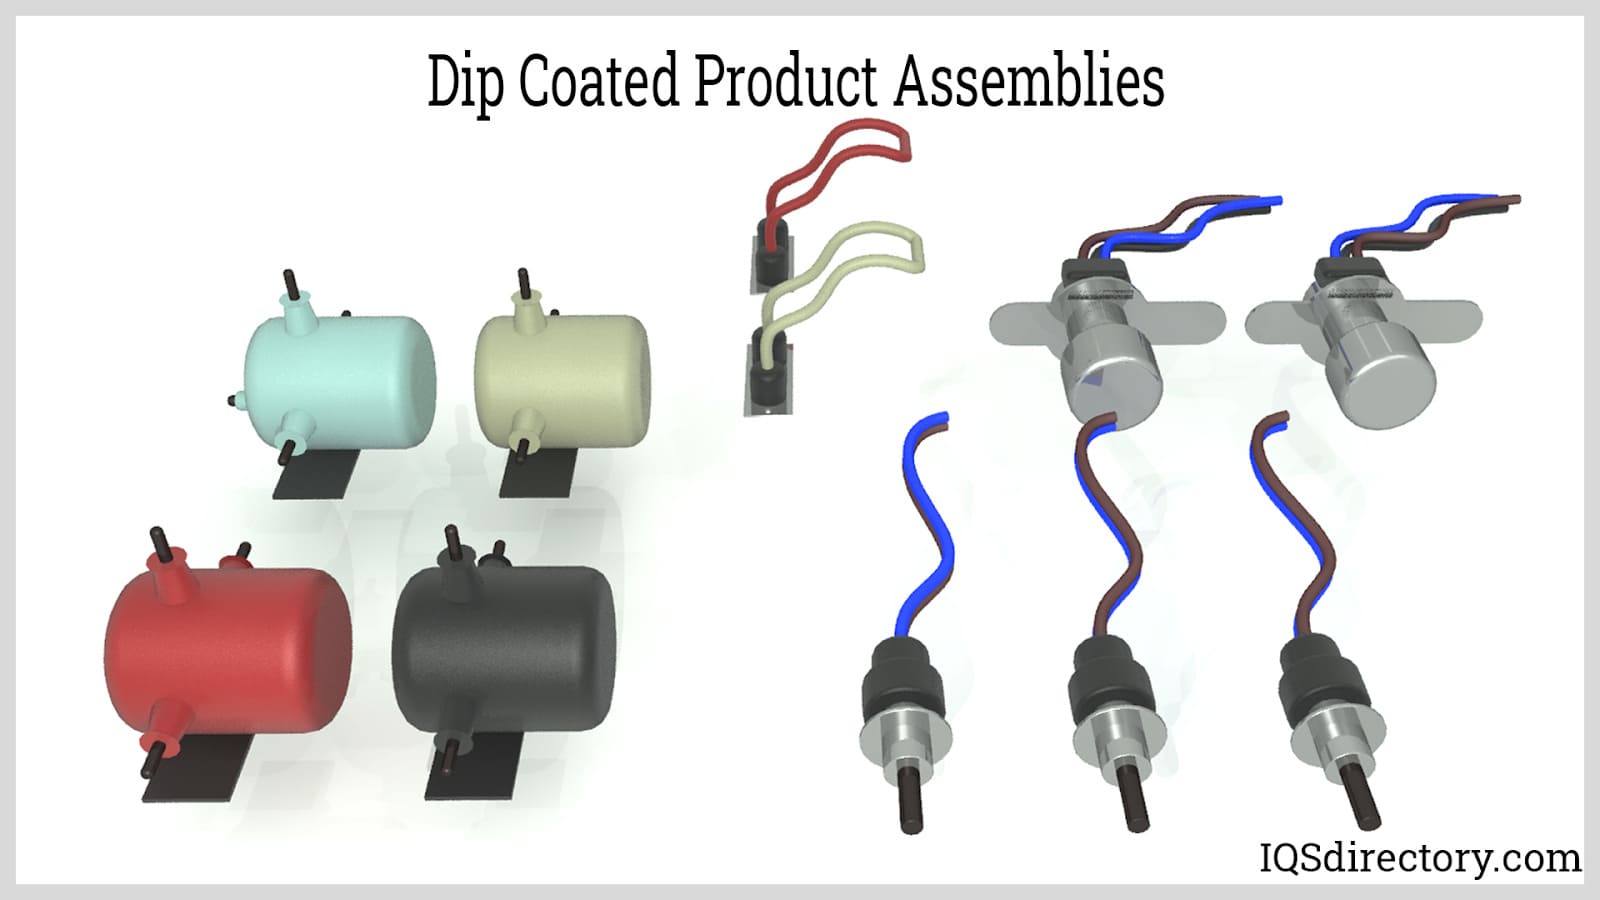 Dip Coated Product Assemblies